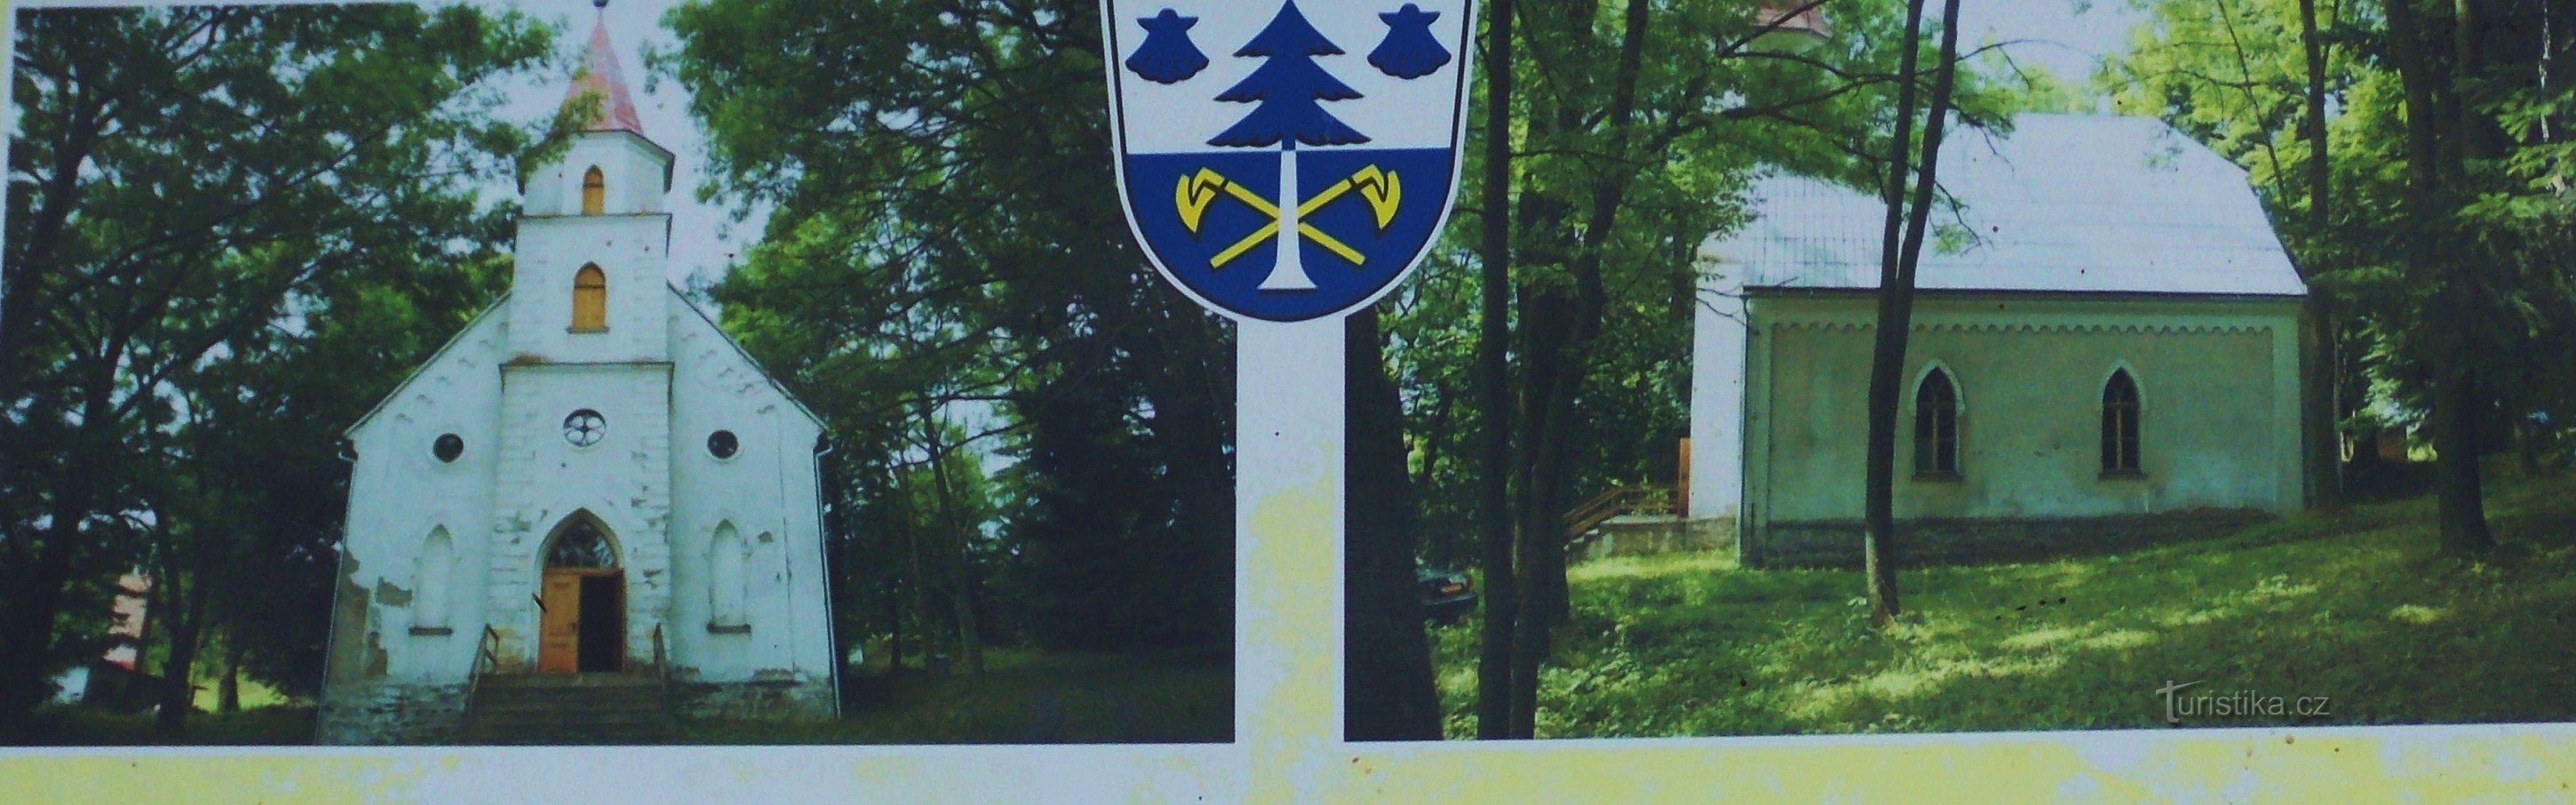 Capilla de Santa Ana en el tramo de Nová Ves - Municipio de Dolní Moravice